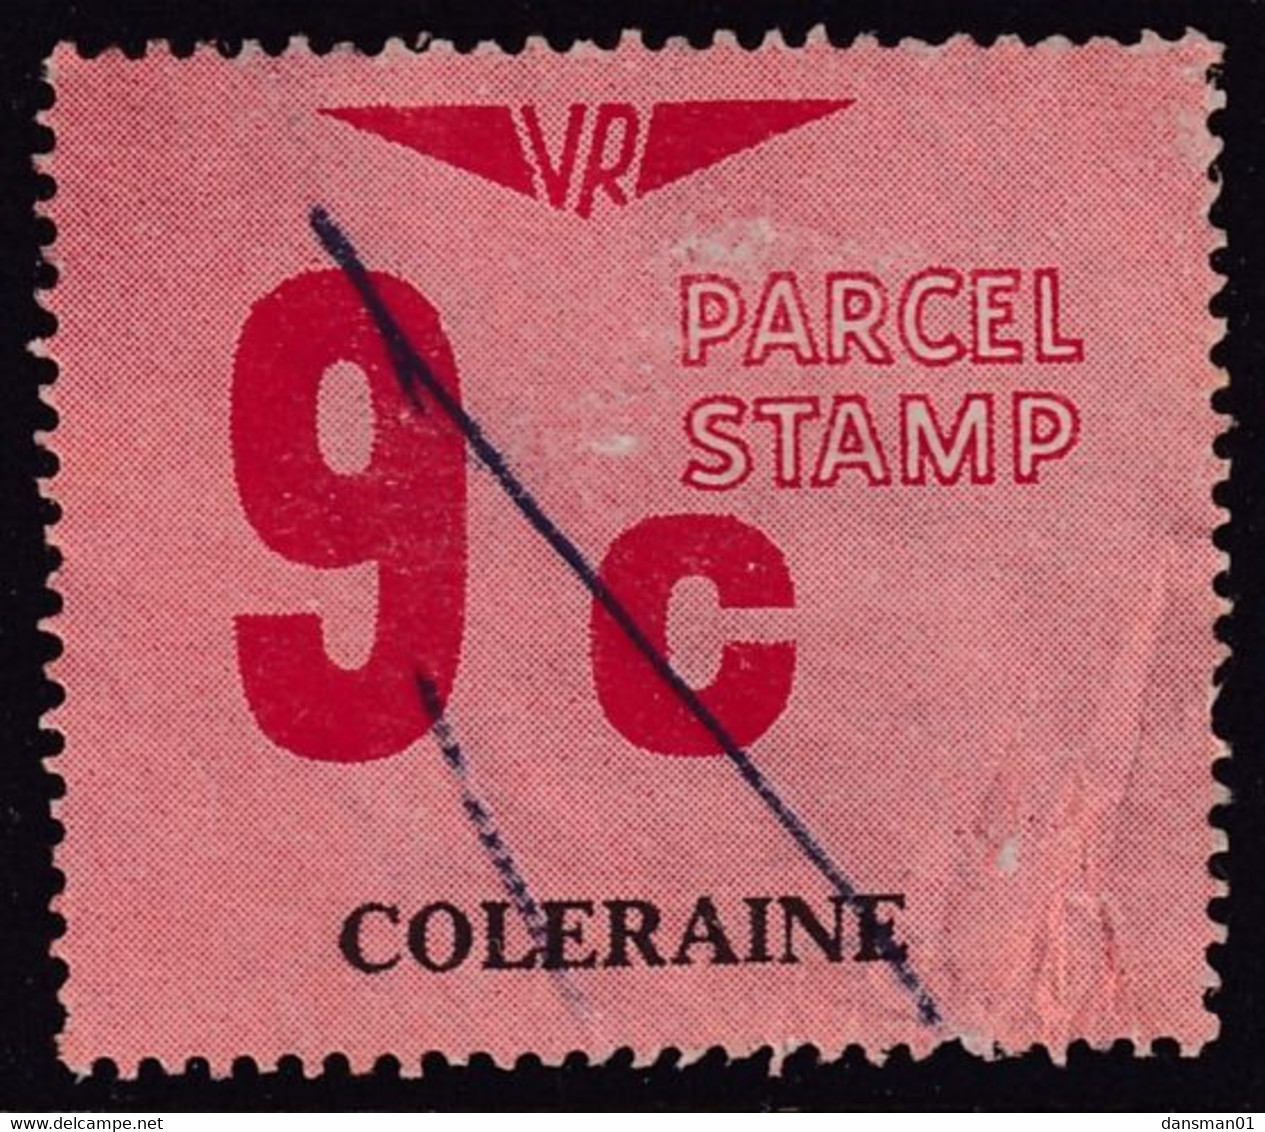 Victoria 1966 Railway Parcel Stamp 9c COLERAINE Used - Errors, Freaks & Oddities (EFO)